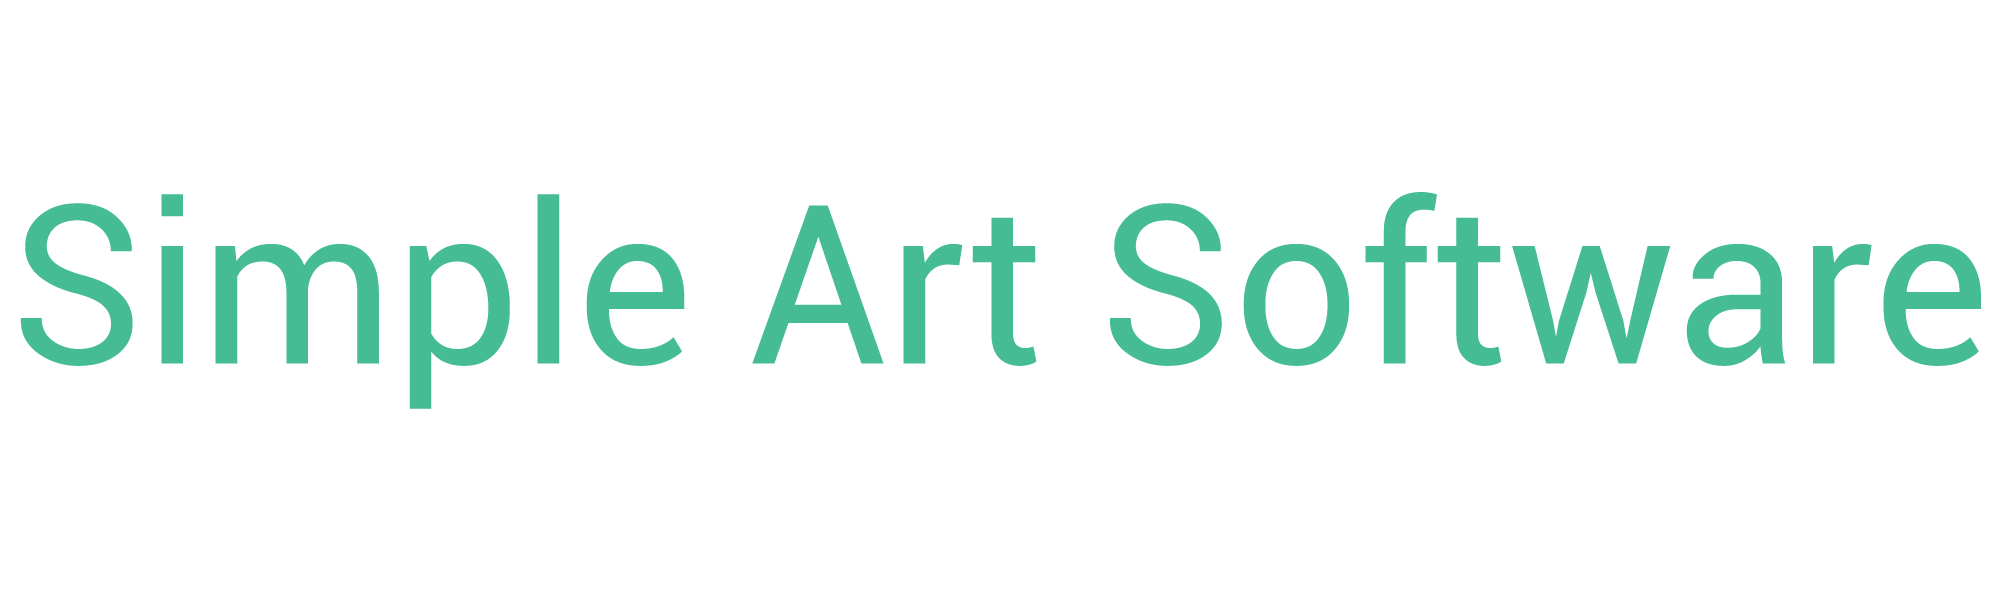 Simple Art Software